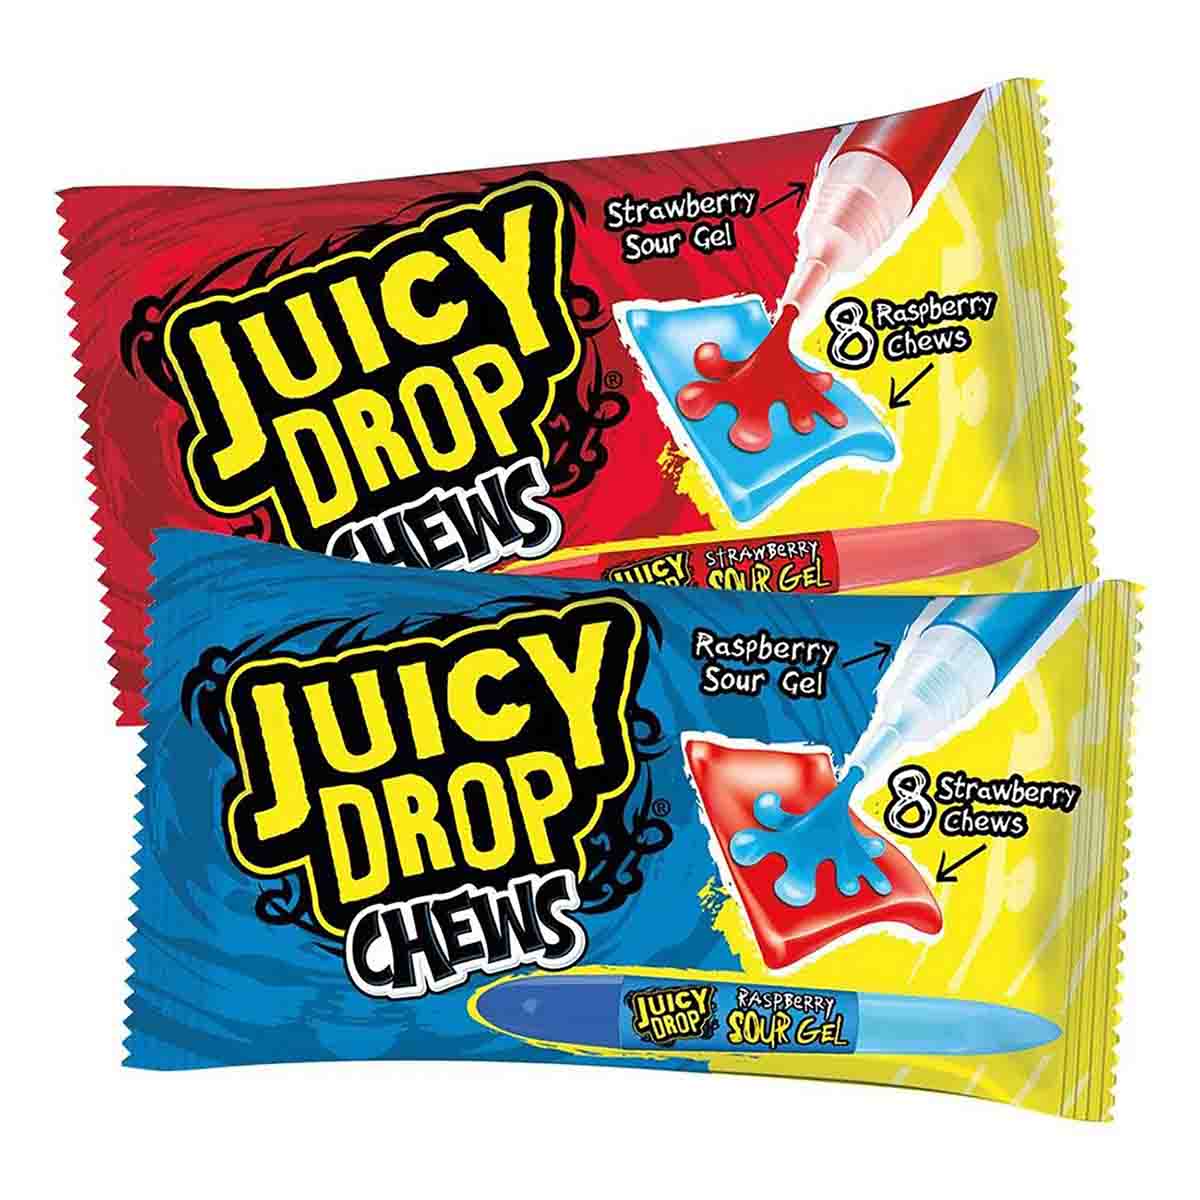 Godis juicy drop chews med gel 67 g